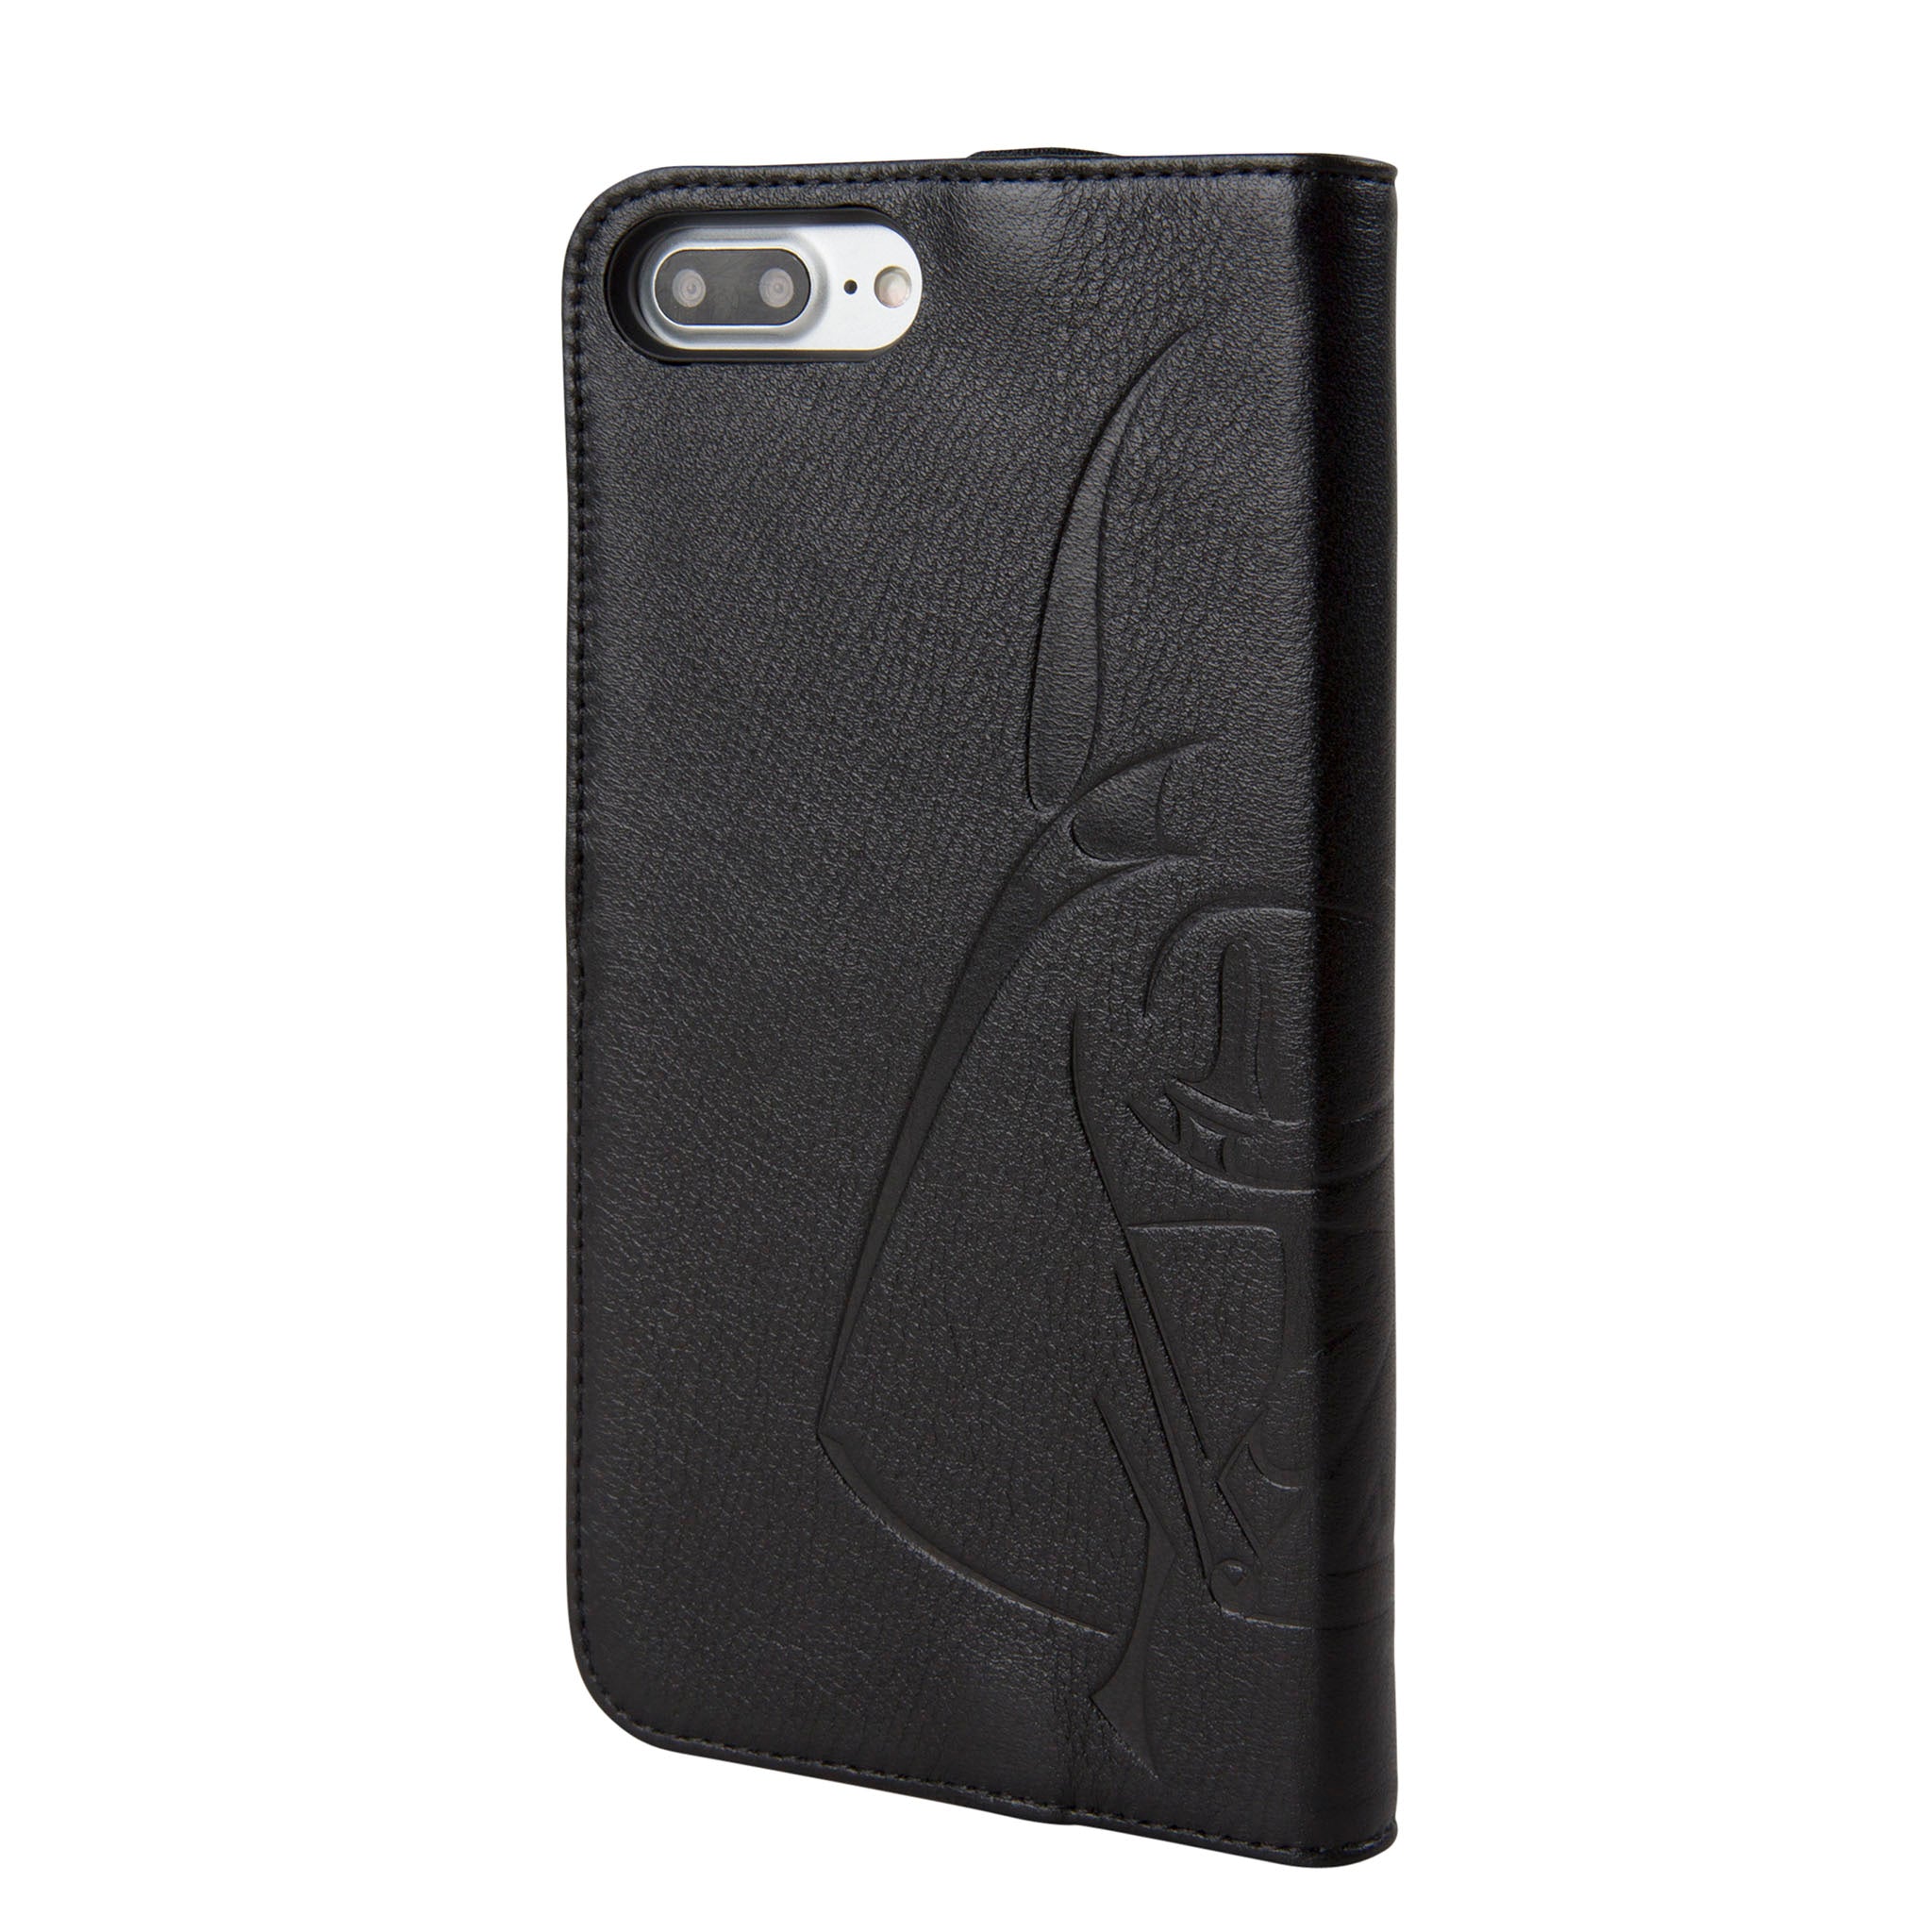 Star Wars Darth Vader Wallet Case for iPhone 8 Plus